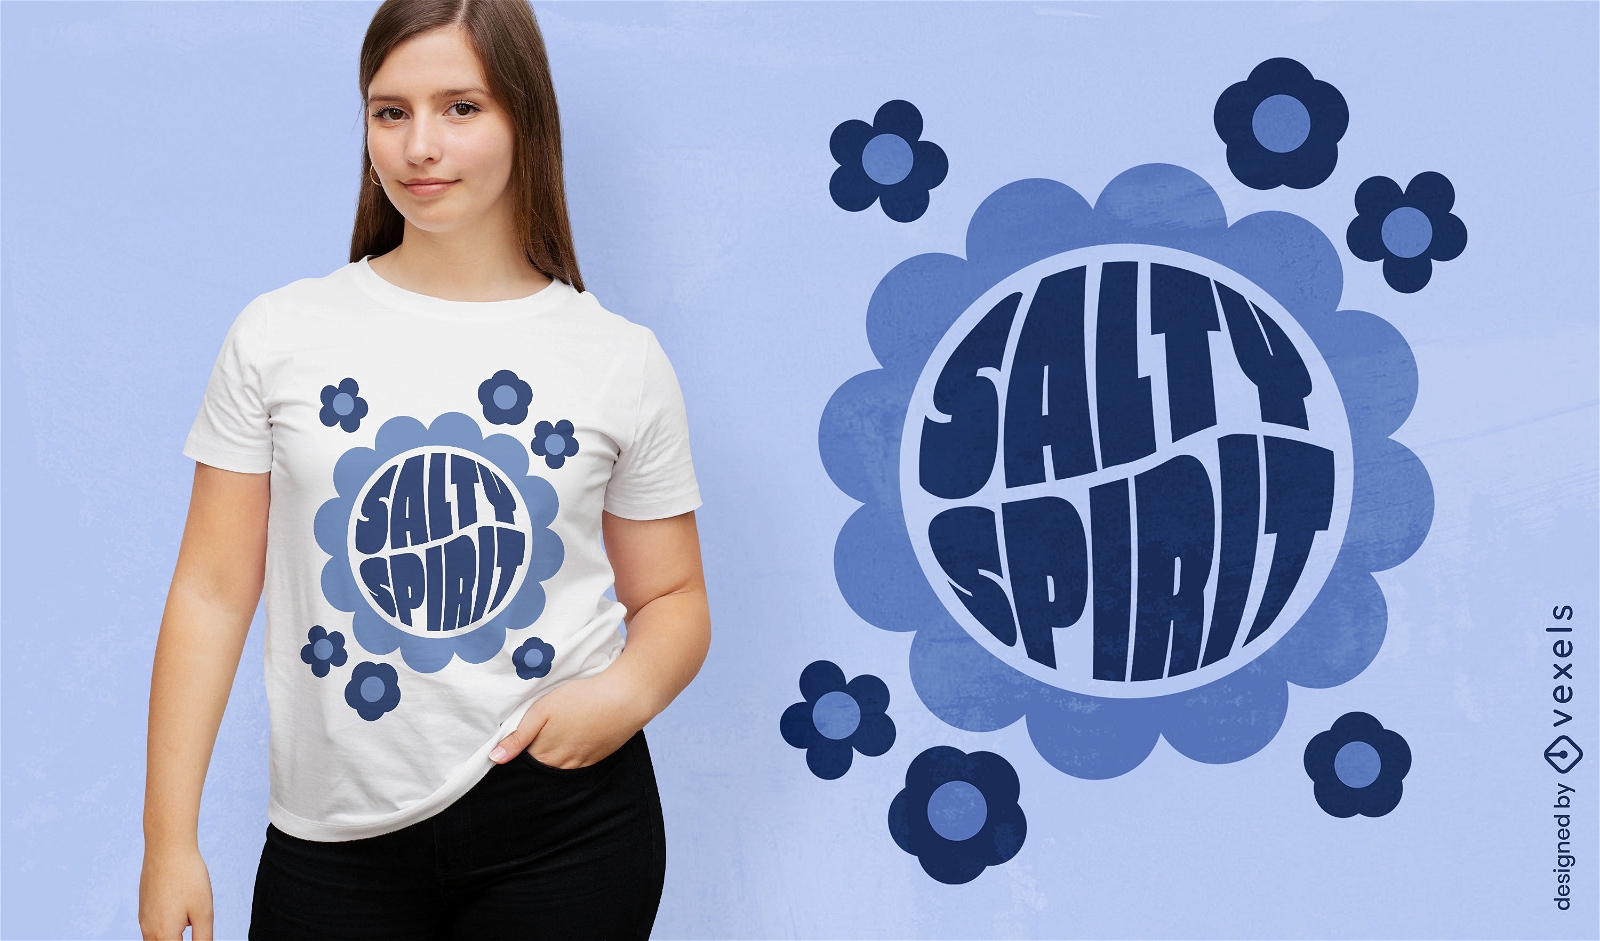 Salty spirit retro t-shirt design